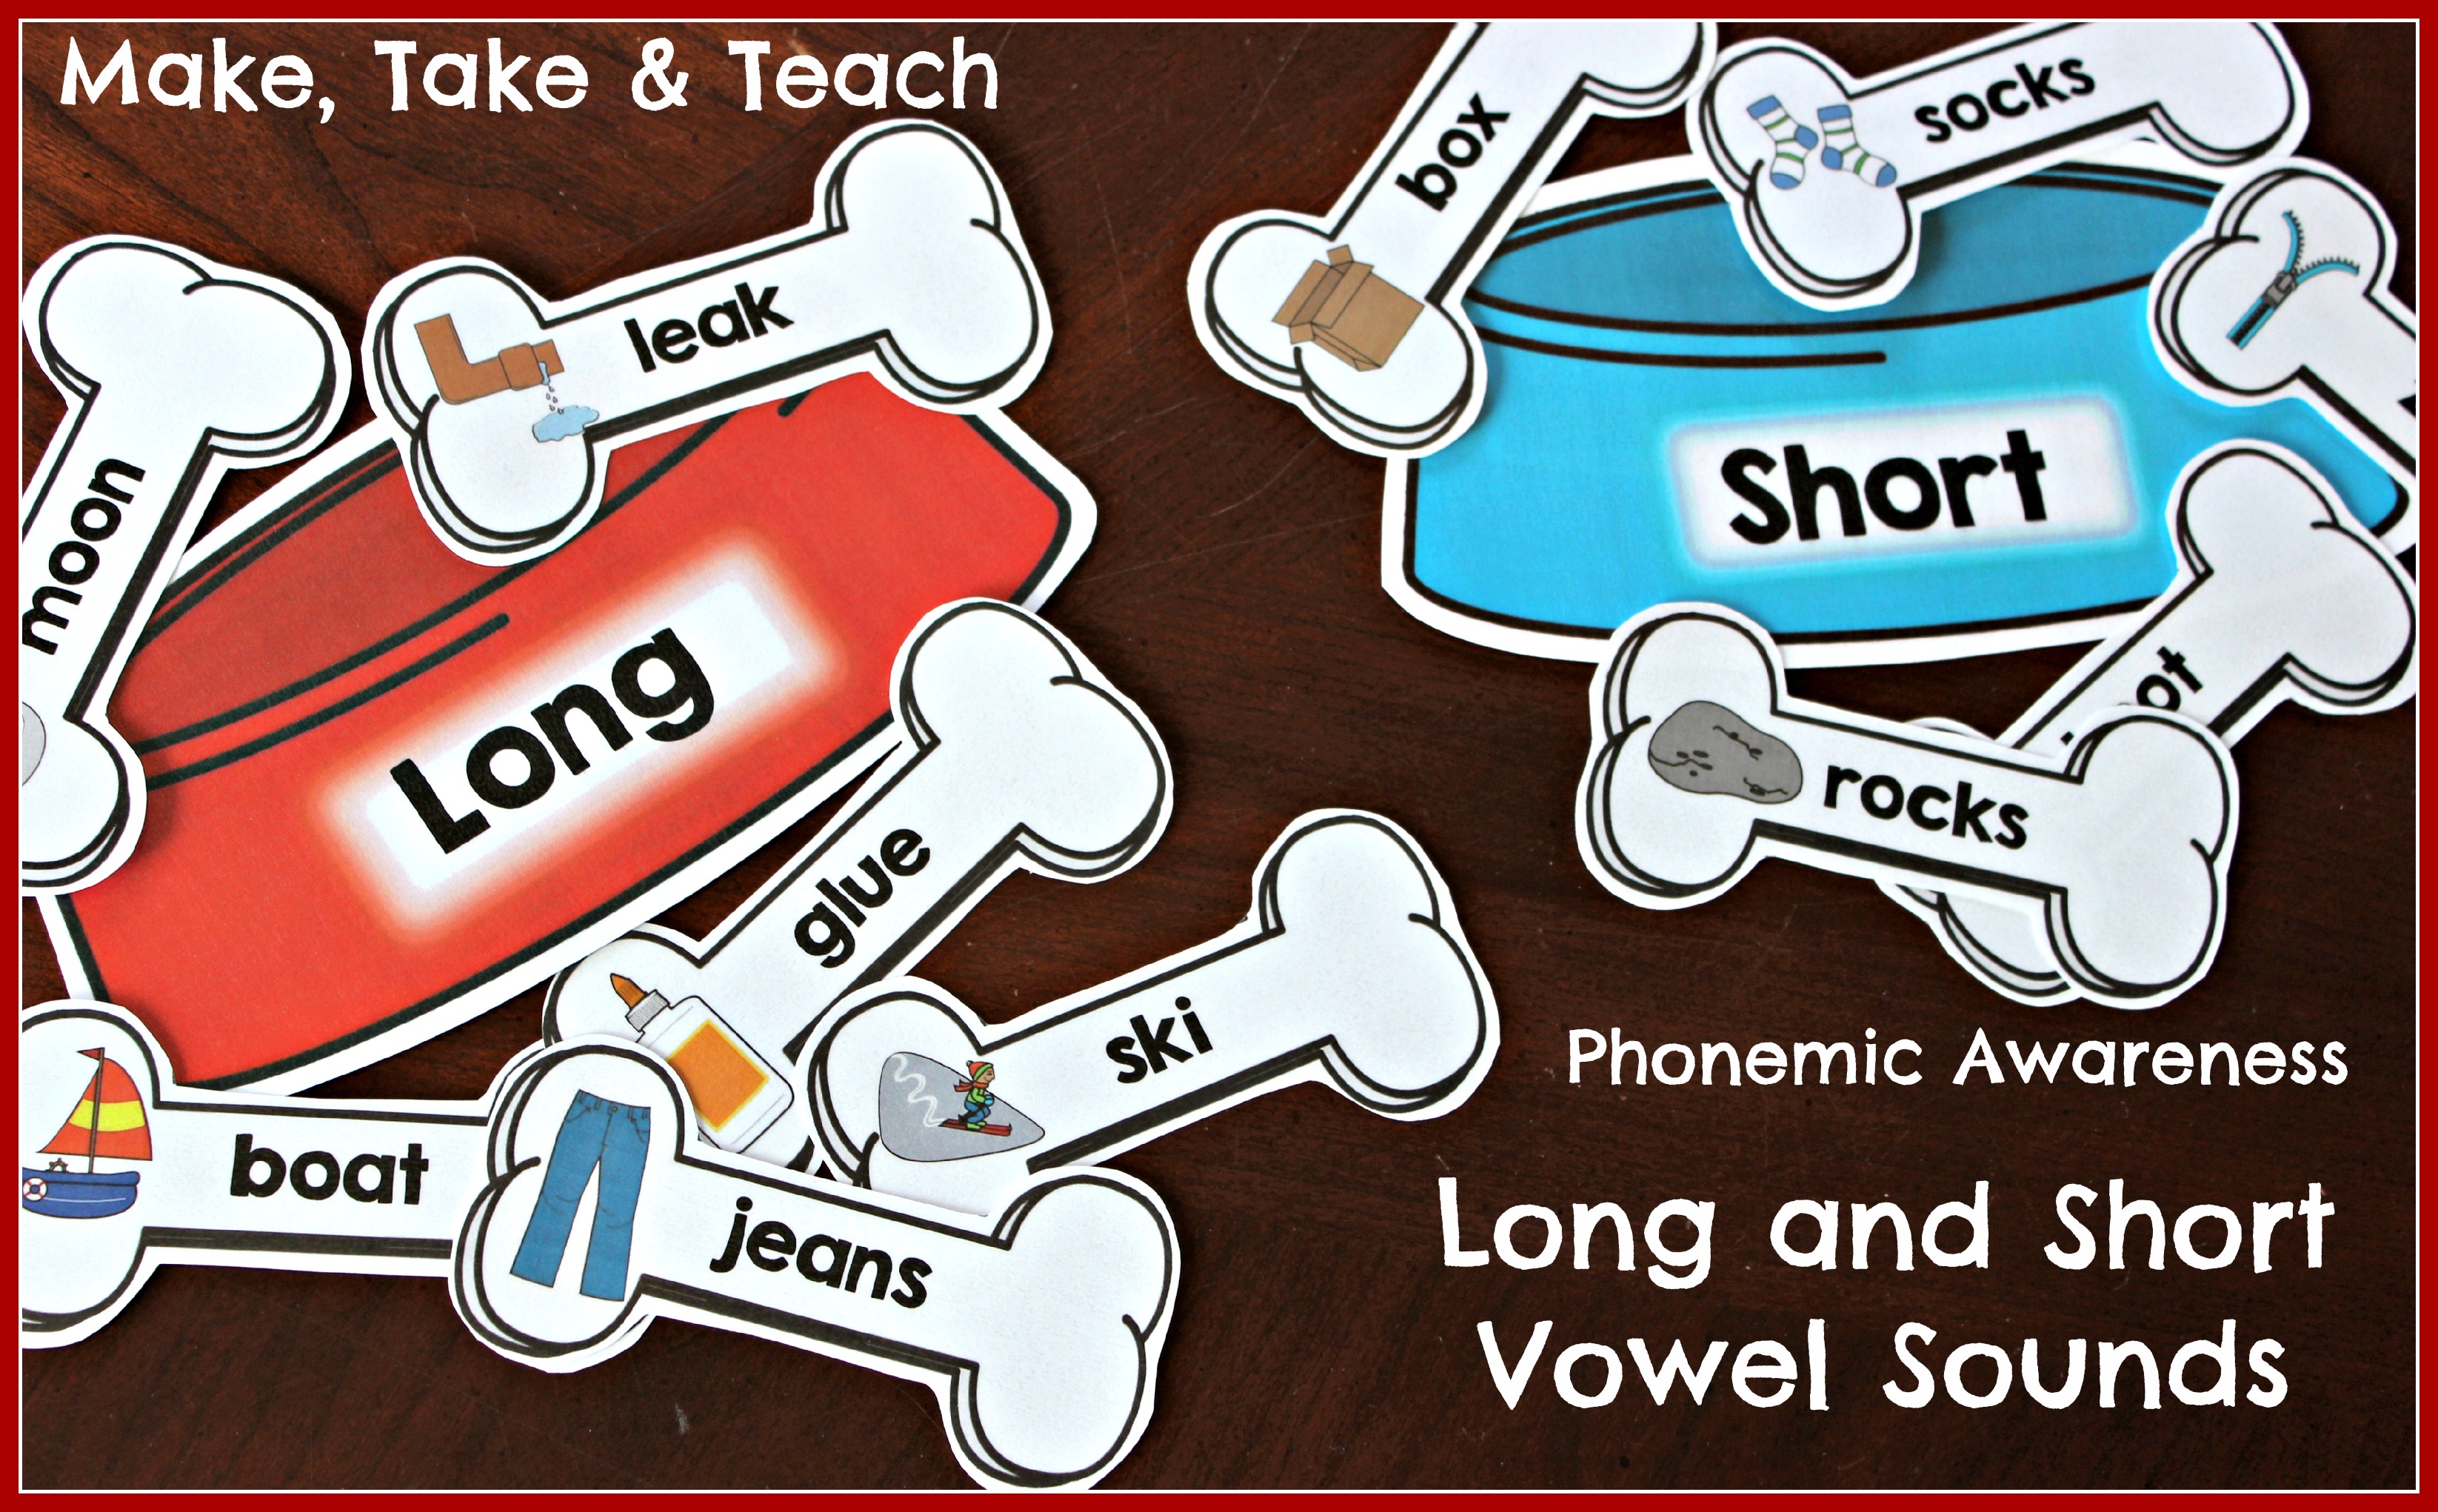 Teaching Long and Short Vowel Sounds - Make Take & Teach